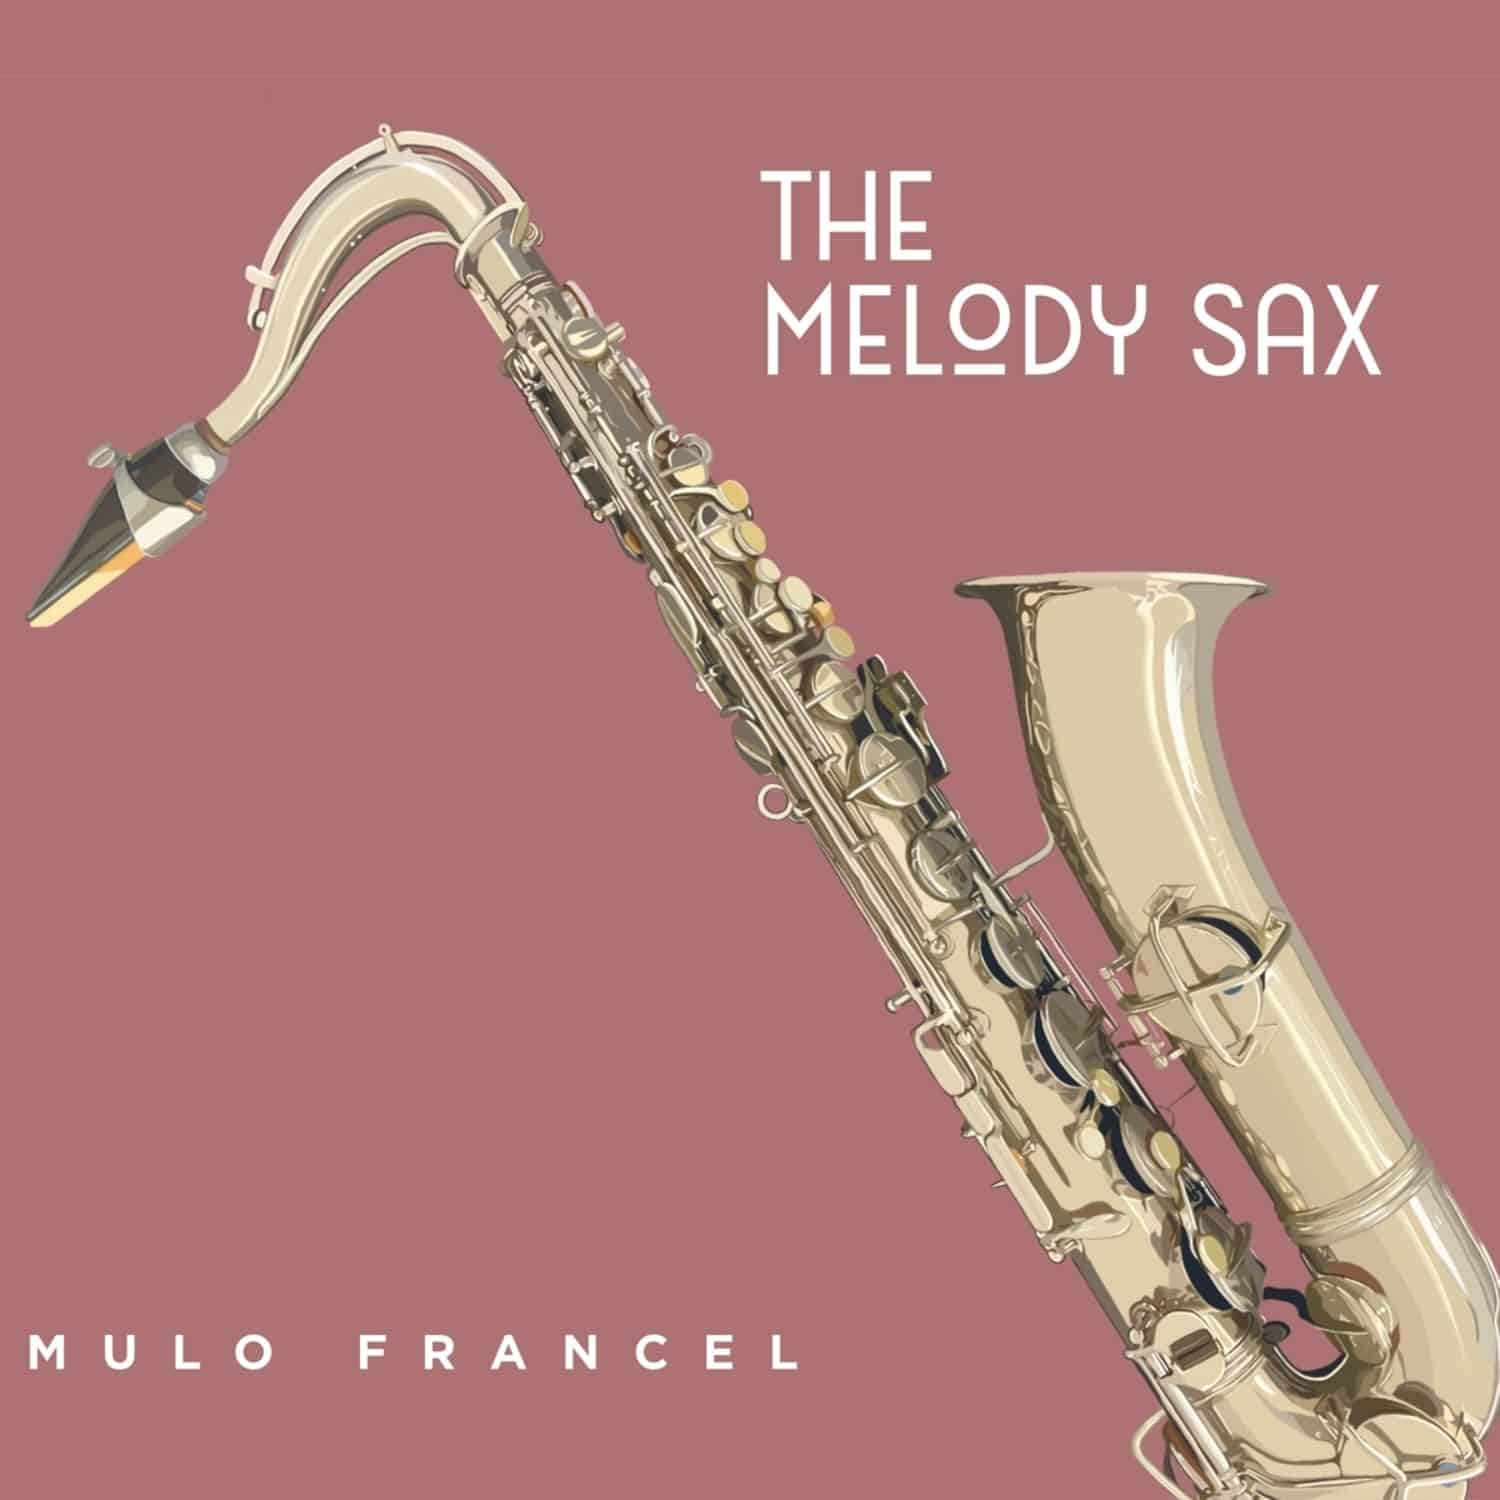  Mulo Francel - THE MELODY SAX 